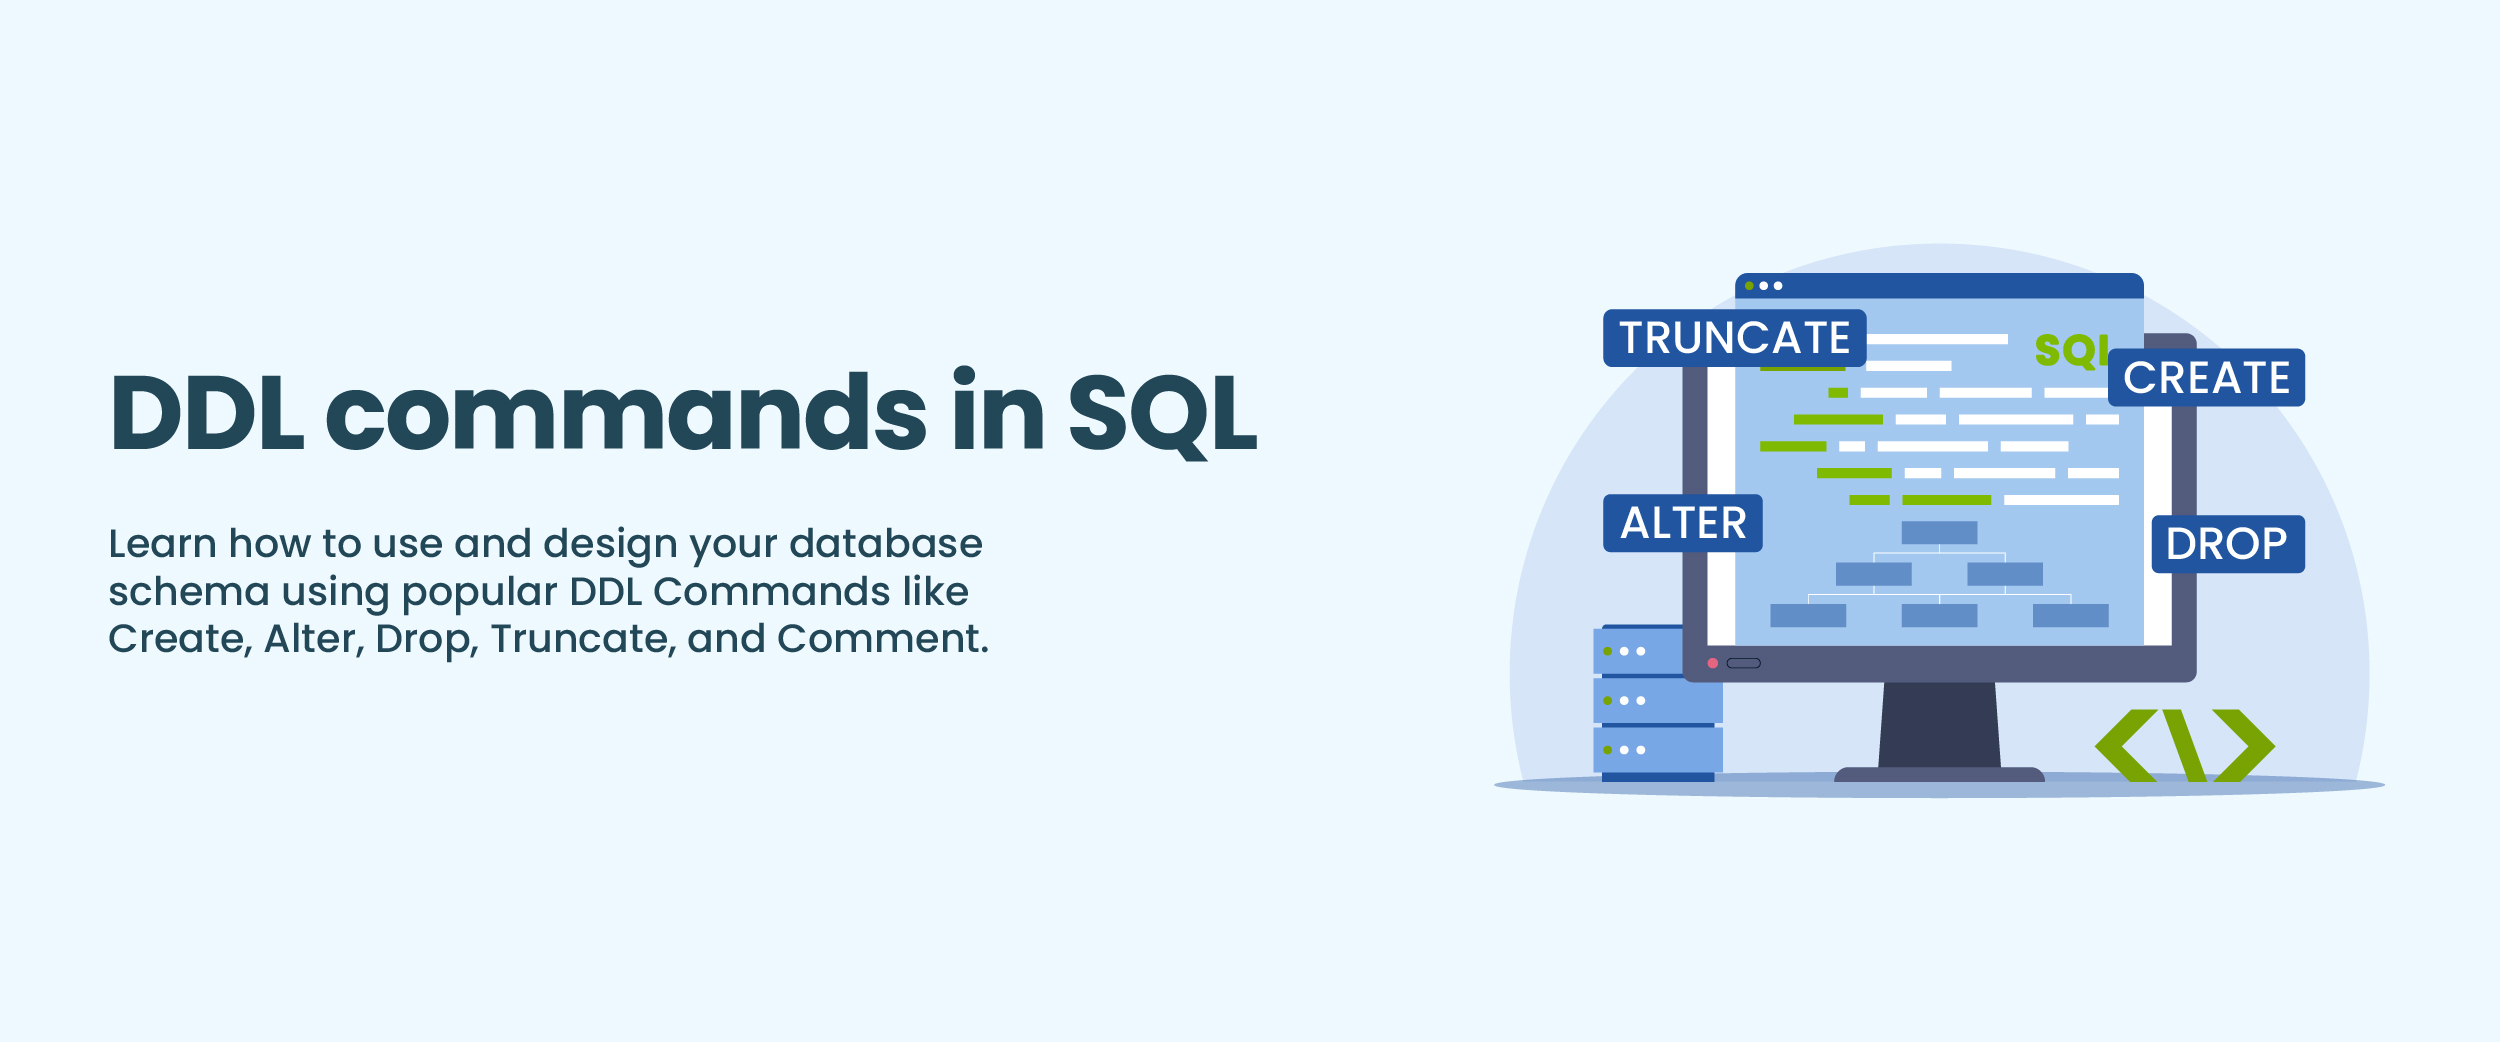 DDL Commands in SQL